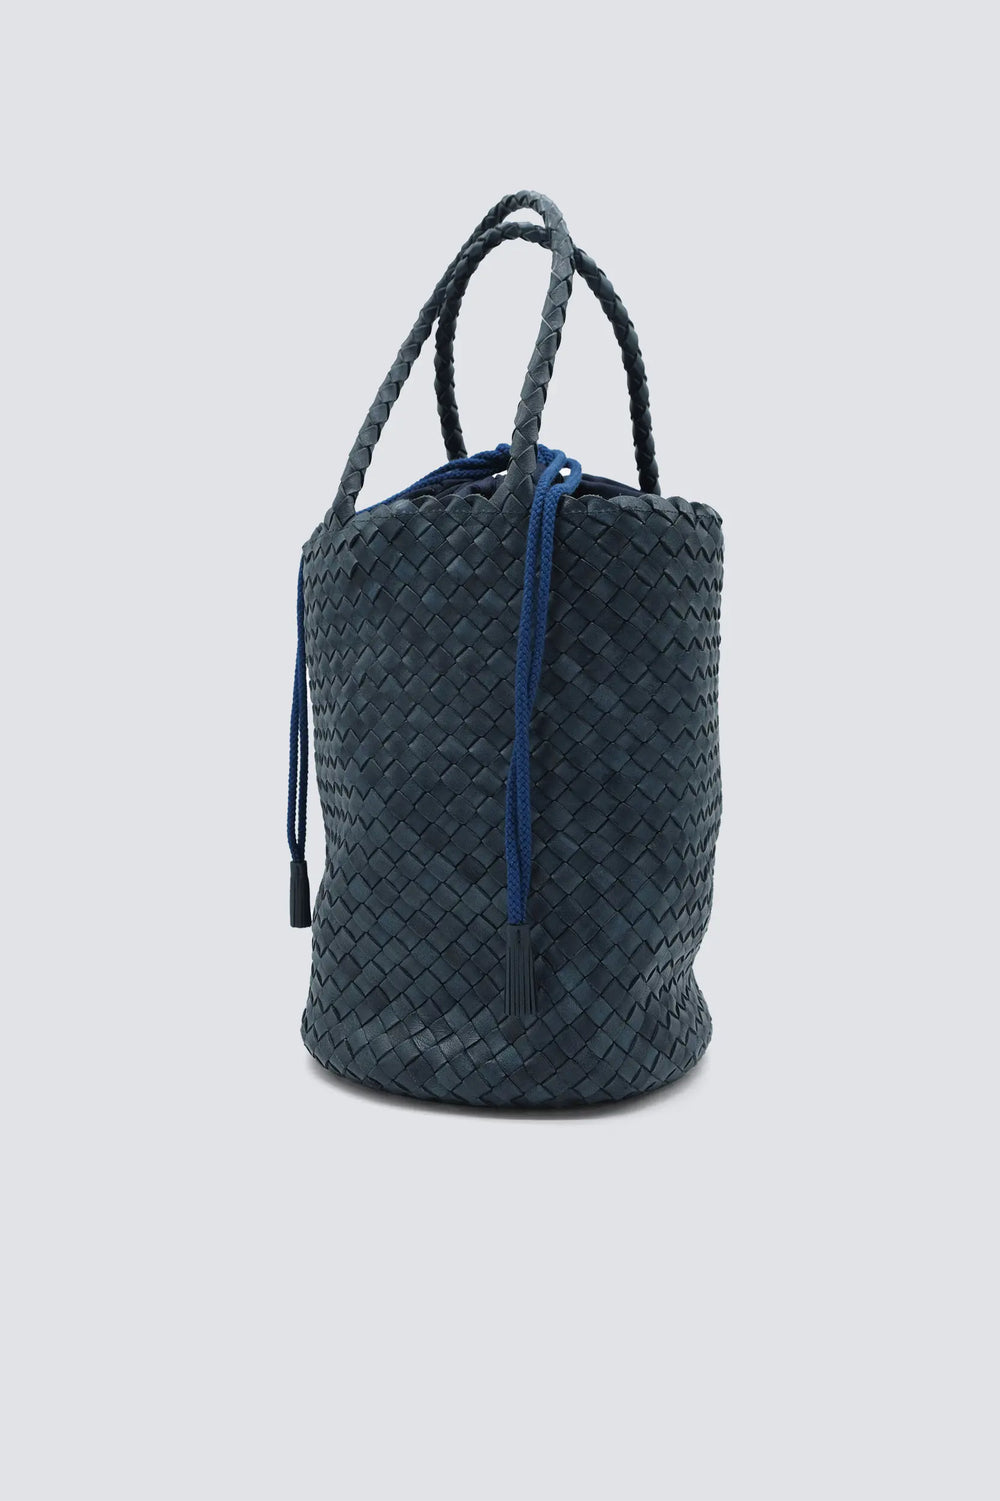 Dragon Diffusion - Woven Leather Bag Handmade - Jacky Bucket Marine